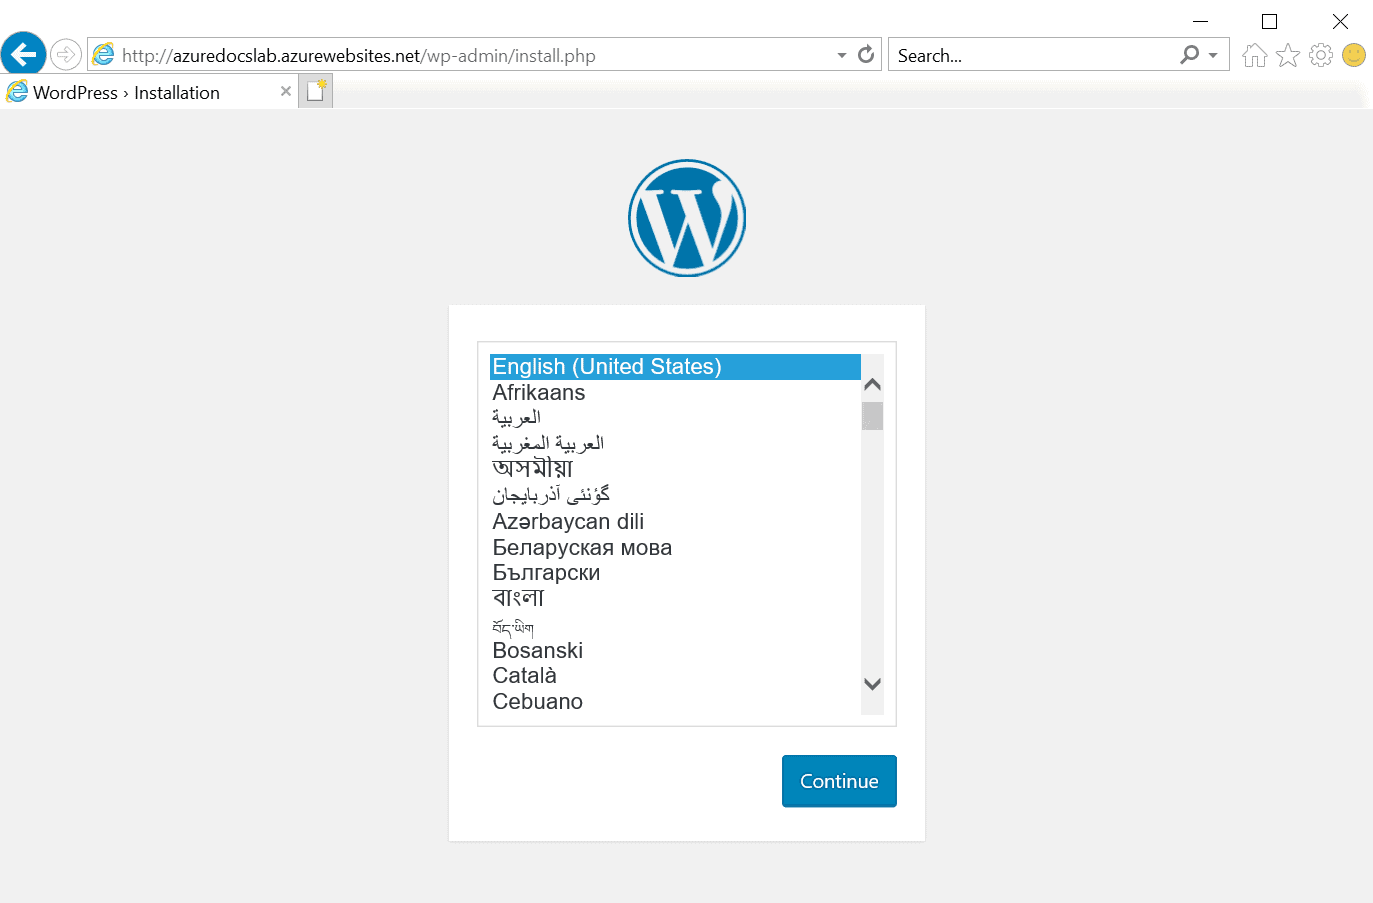 WordPress on Azure